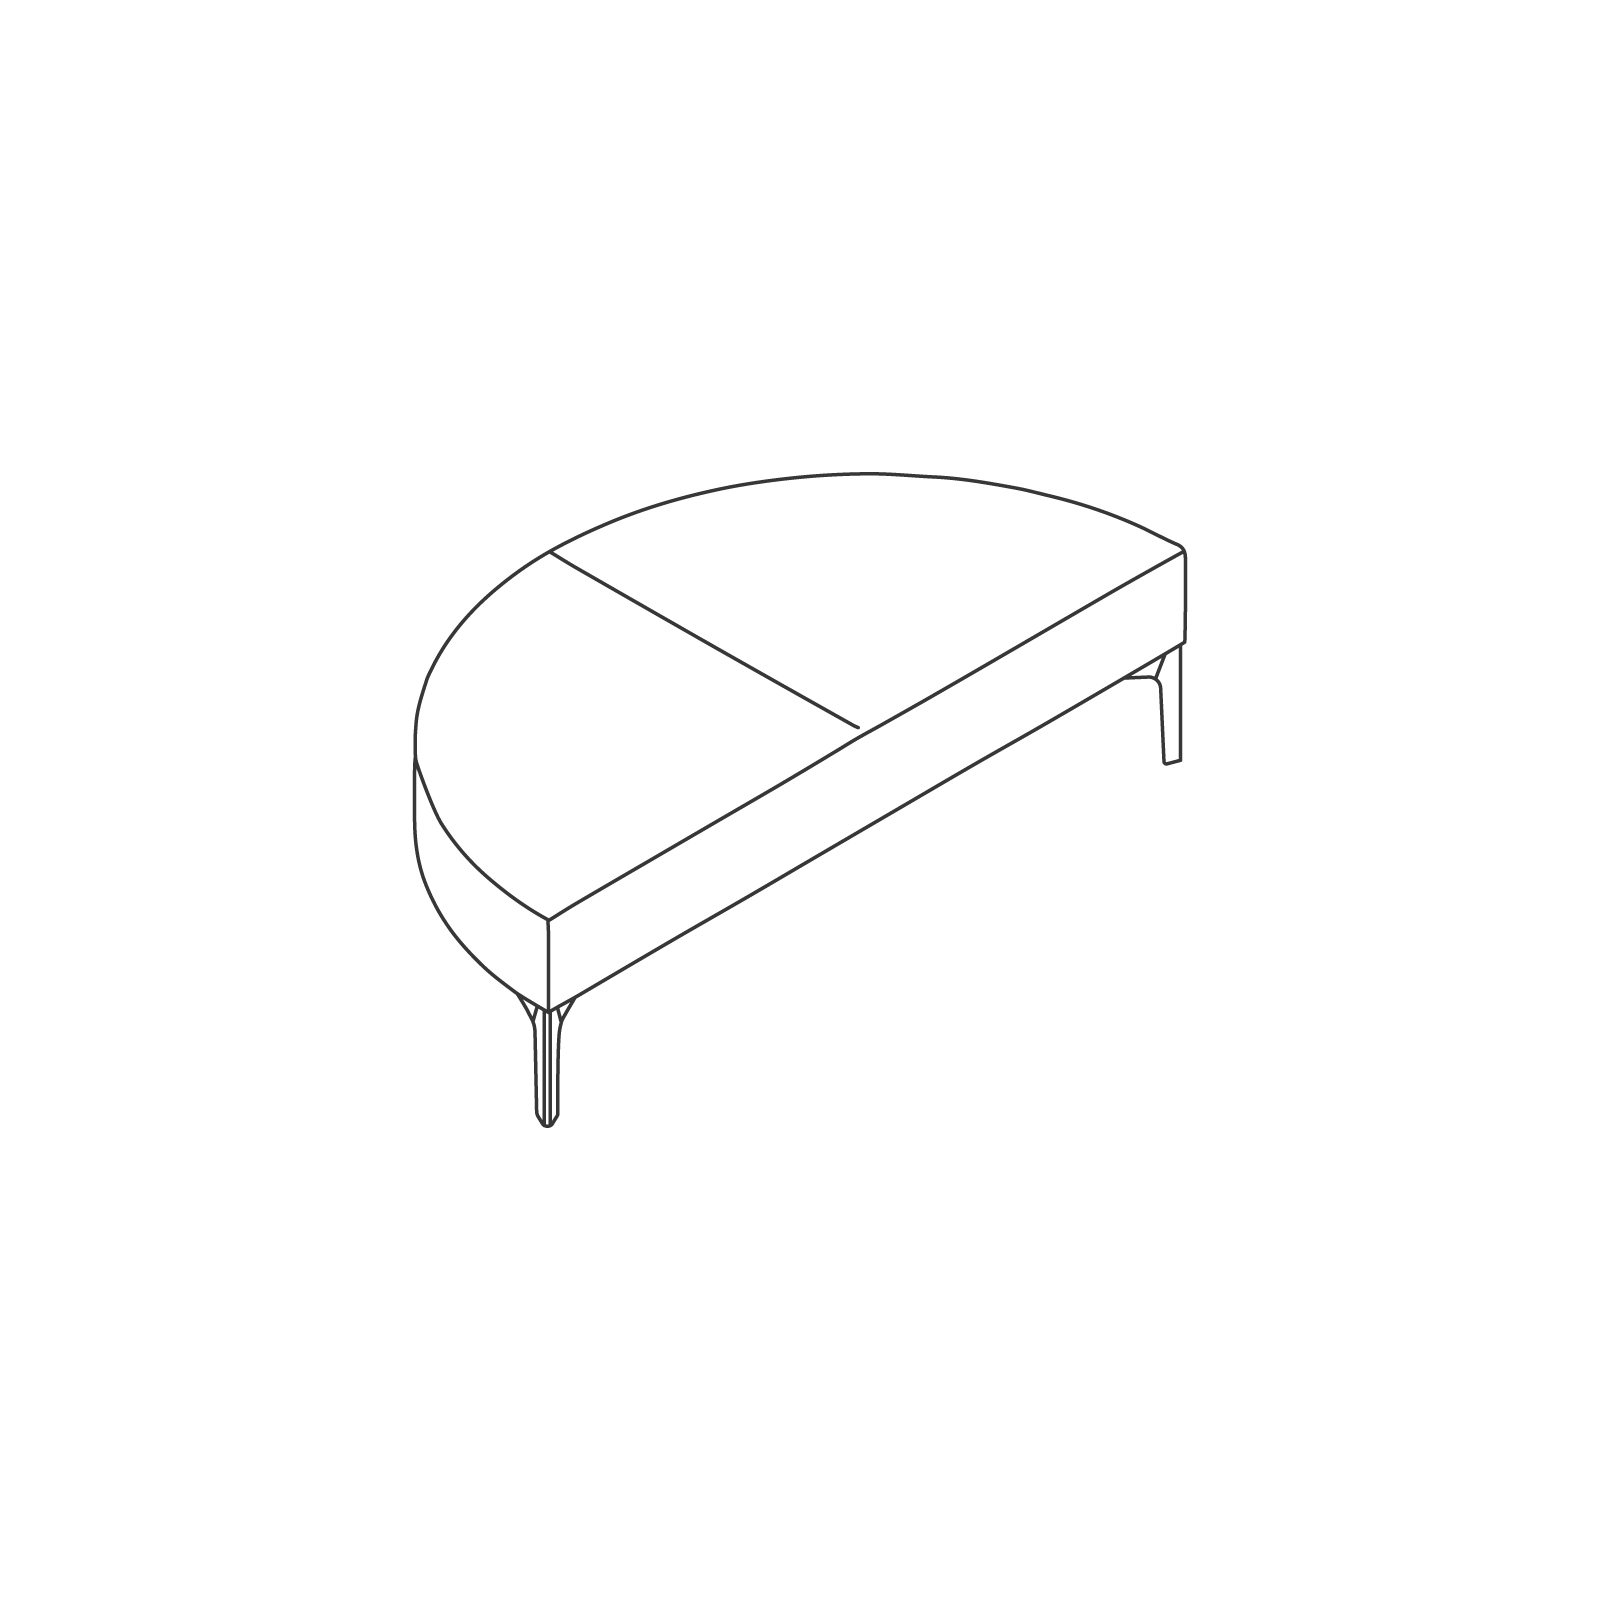 A line drawing - Symbol Modular Seating–Bench–180-Degree External Curve